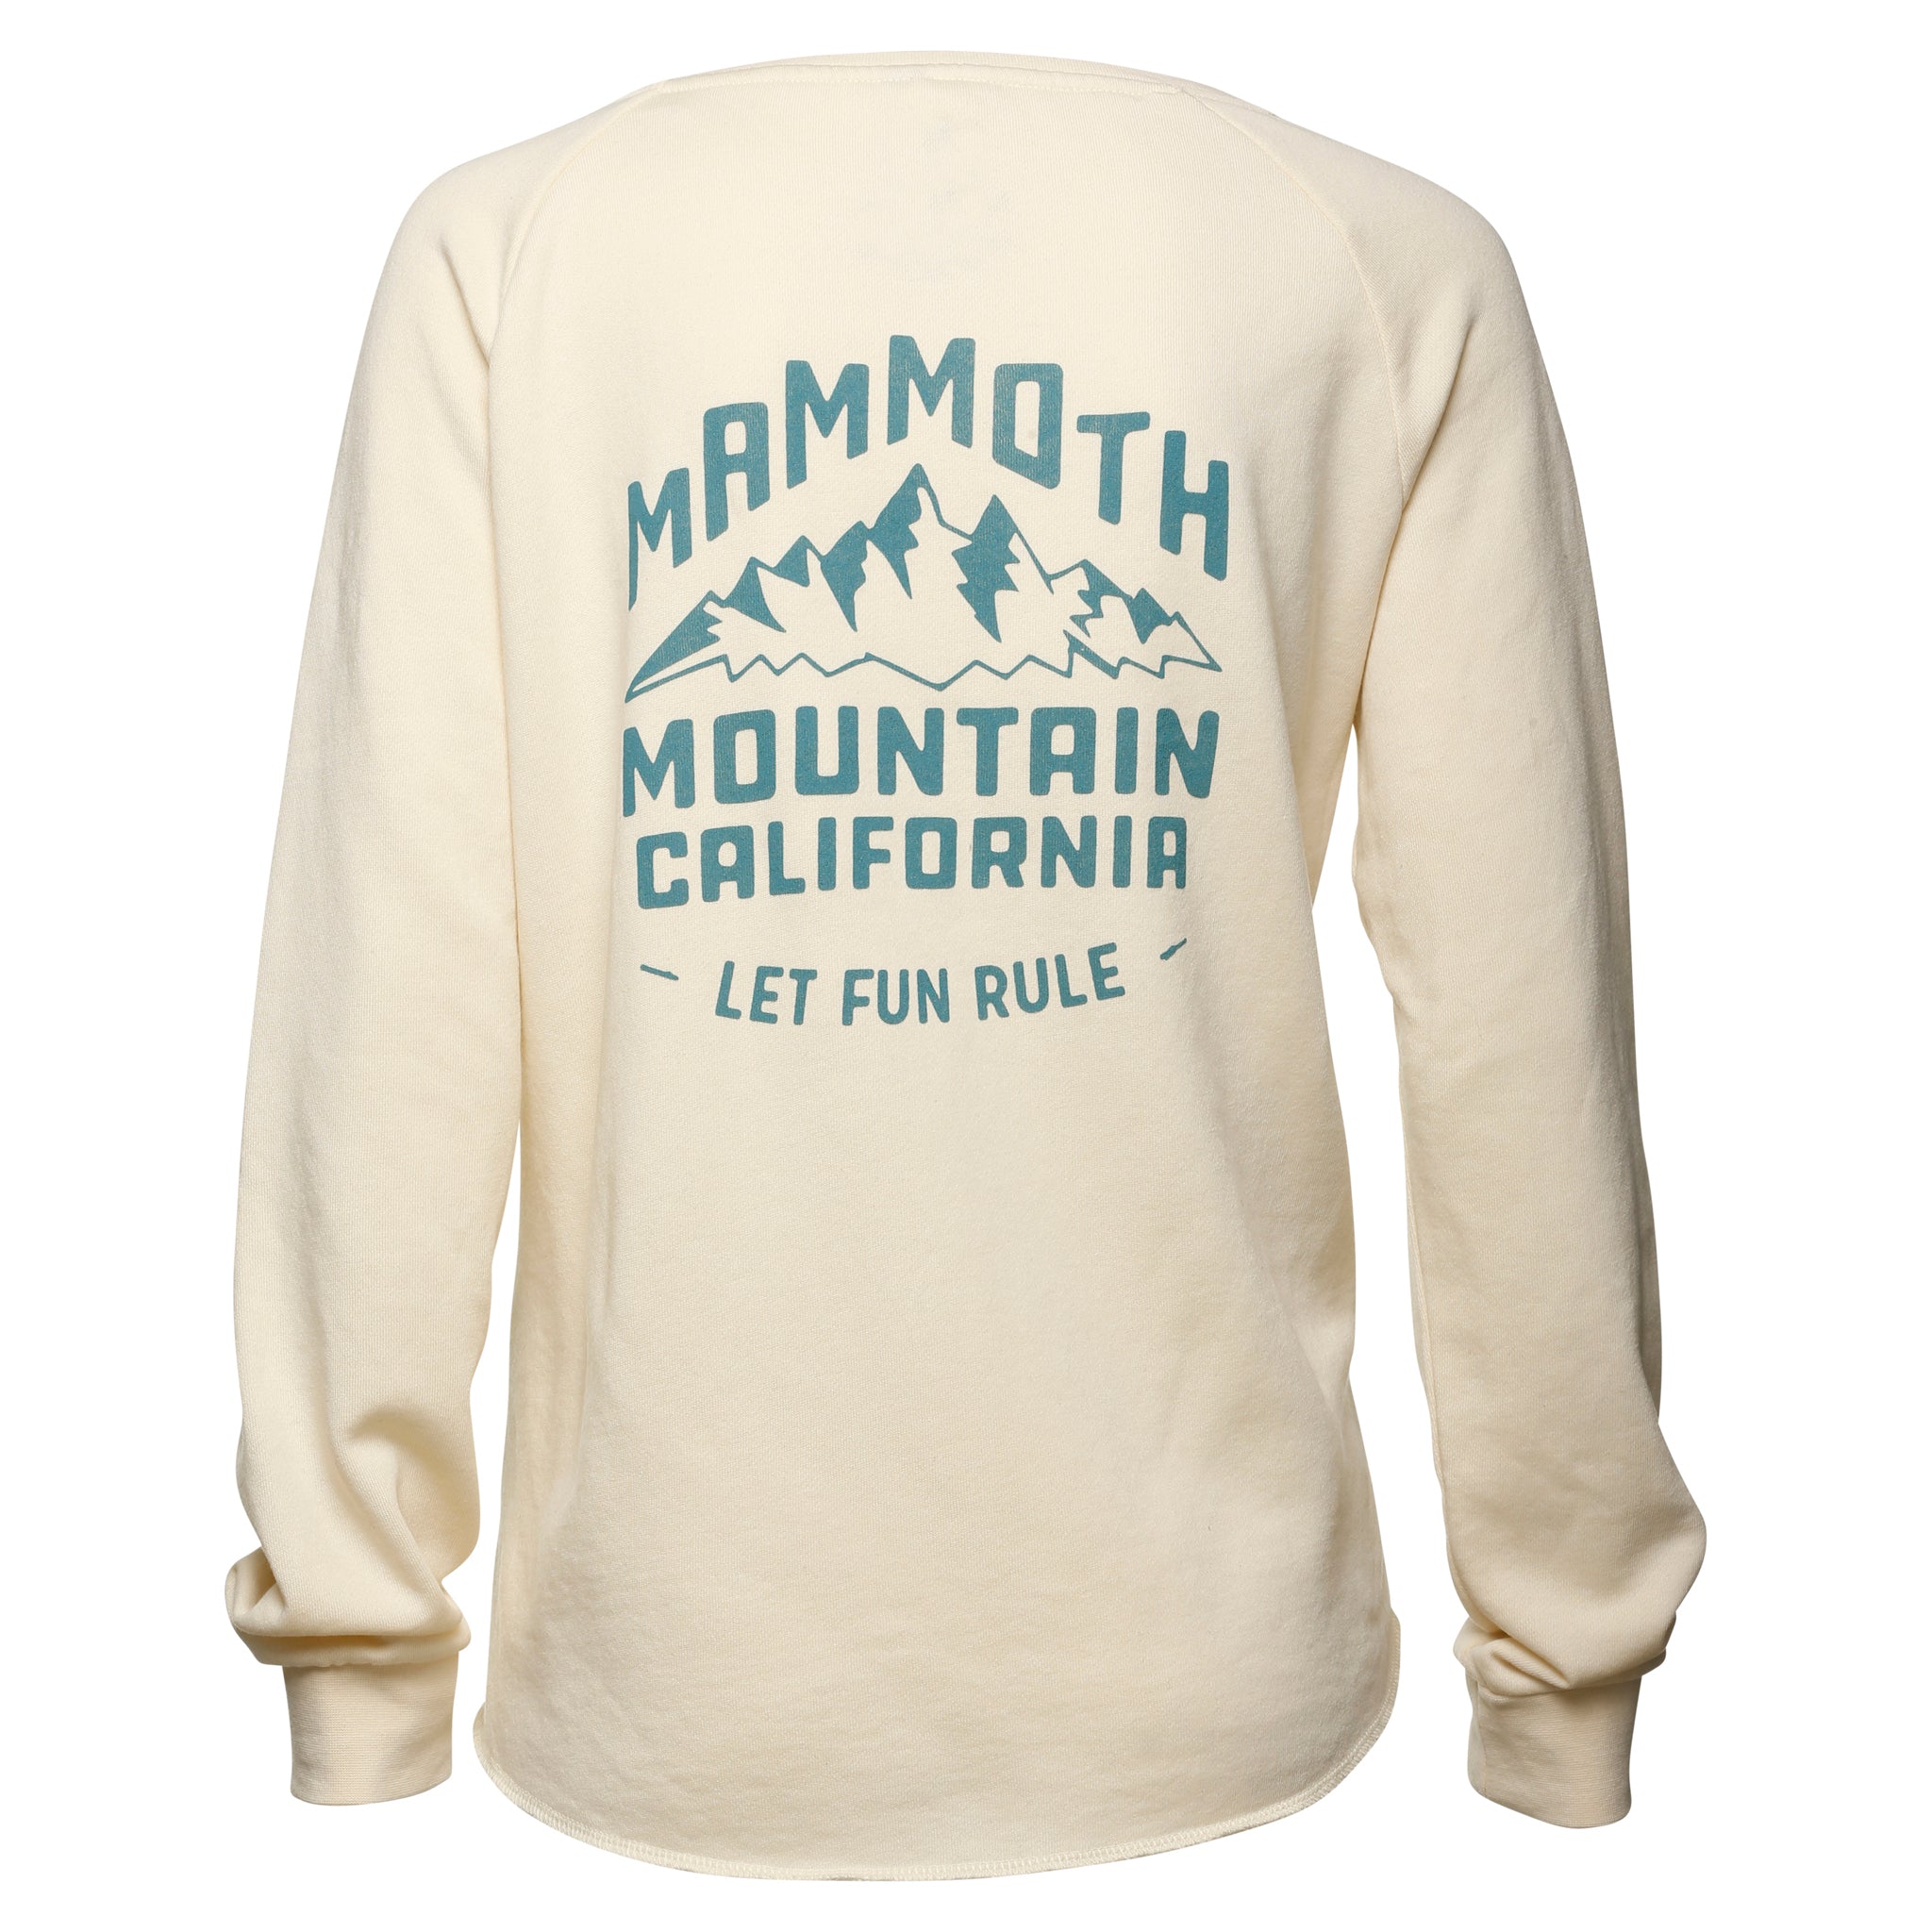 Crown Youth Crew Neck Sweatshirt - Mammoth Mountain